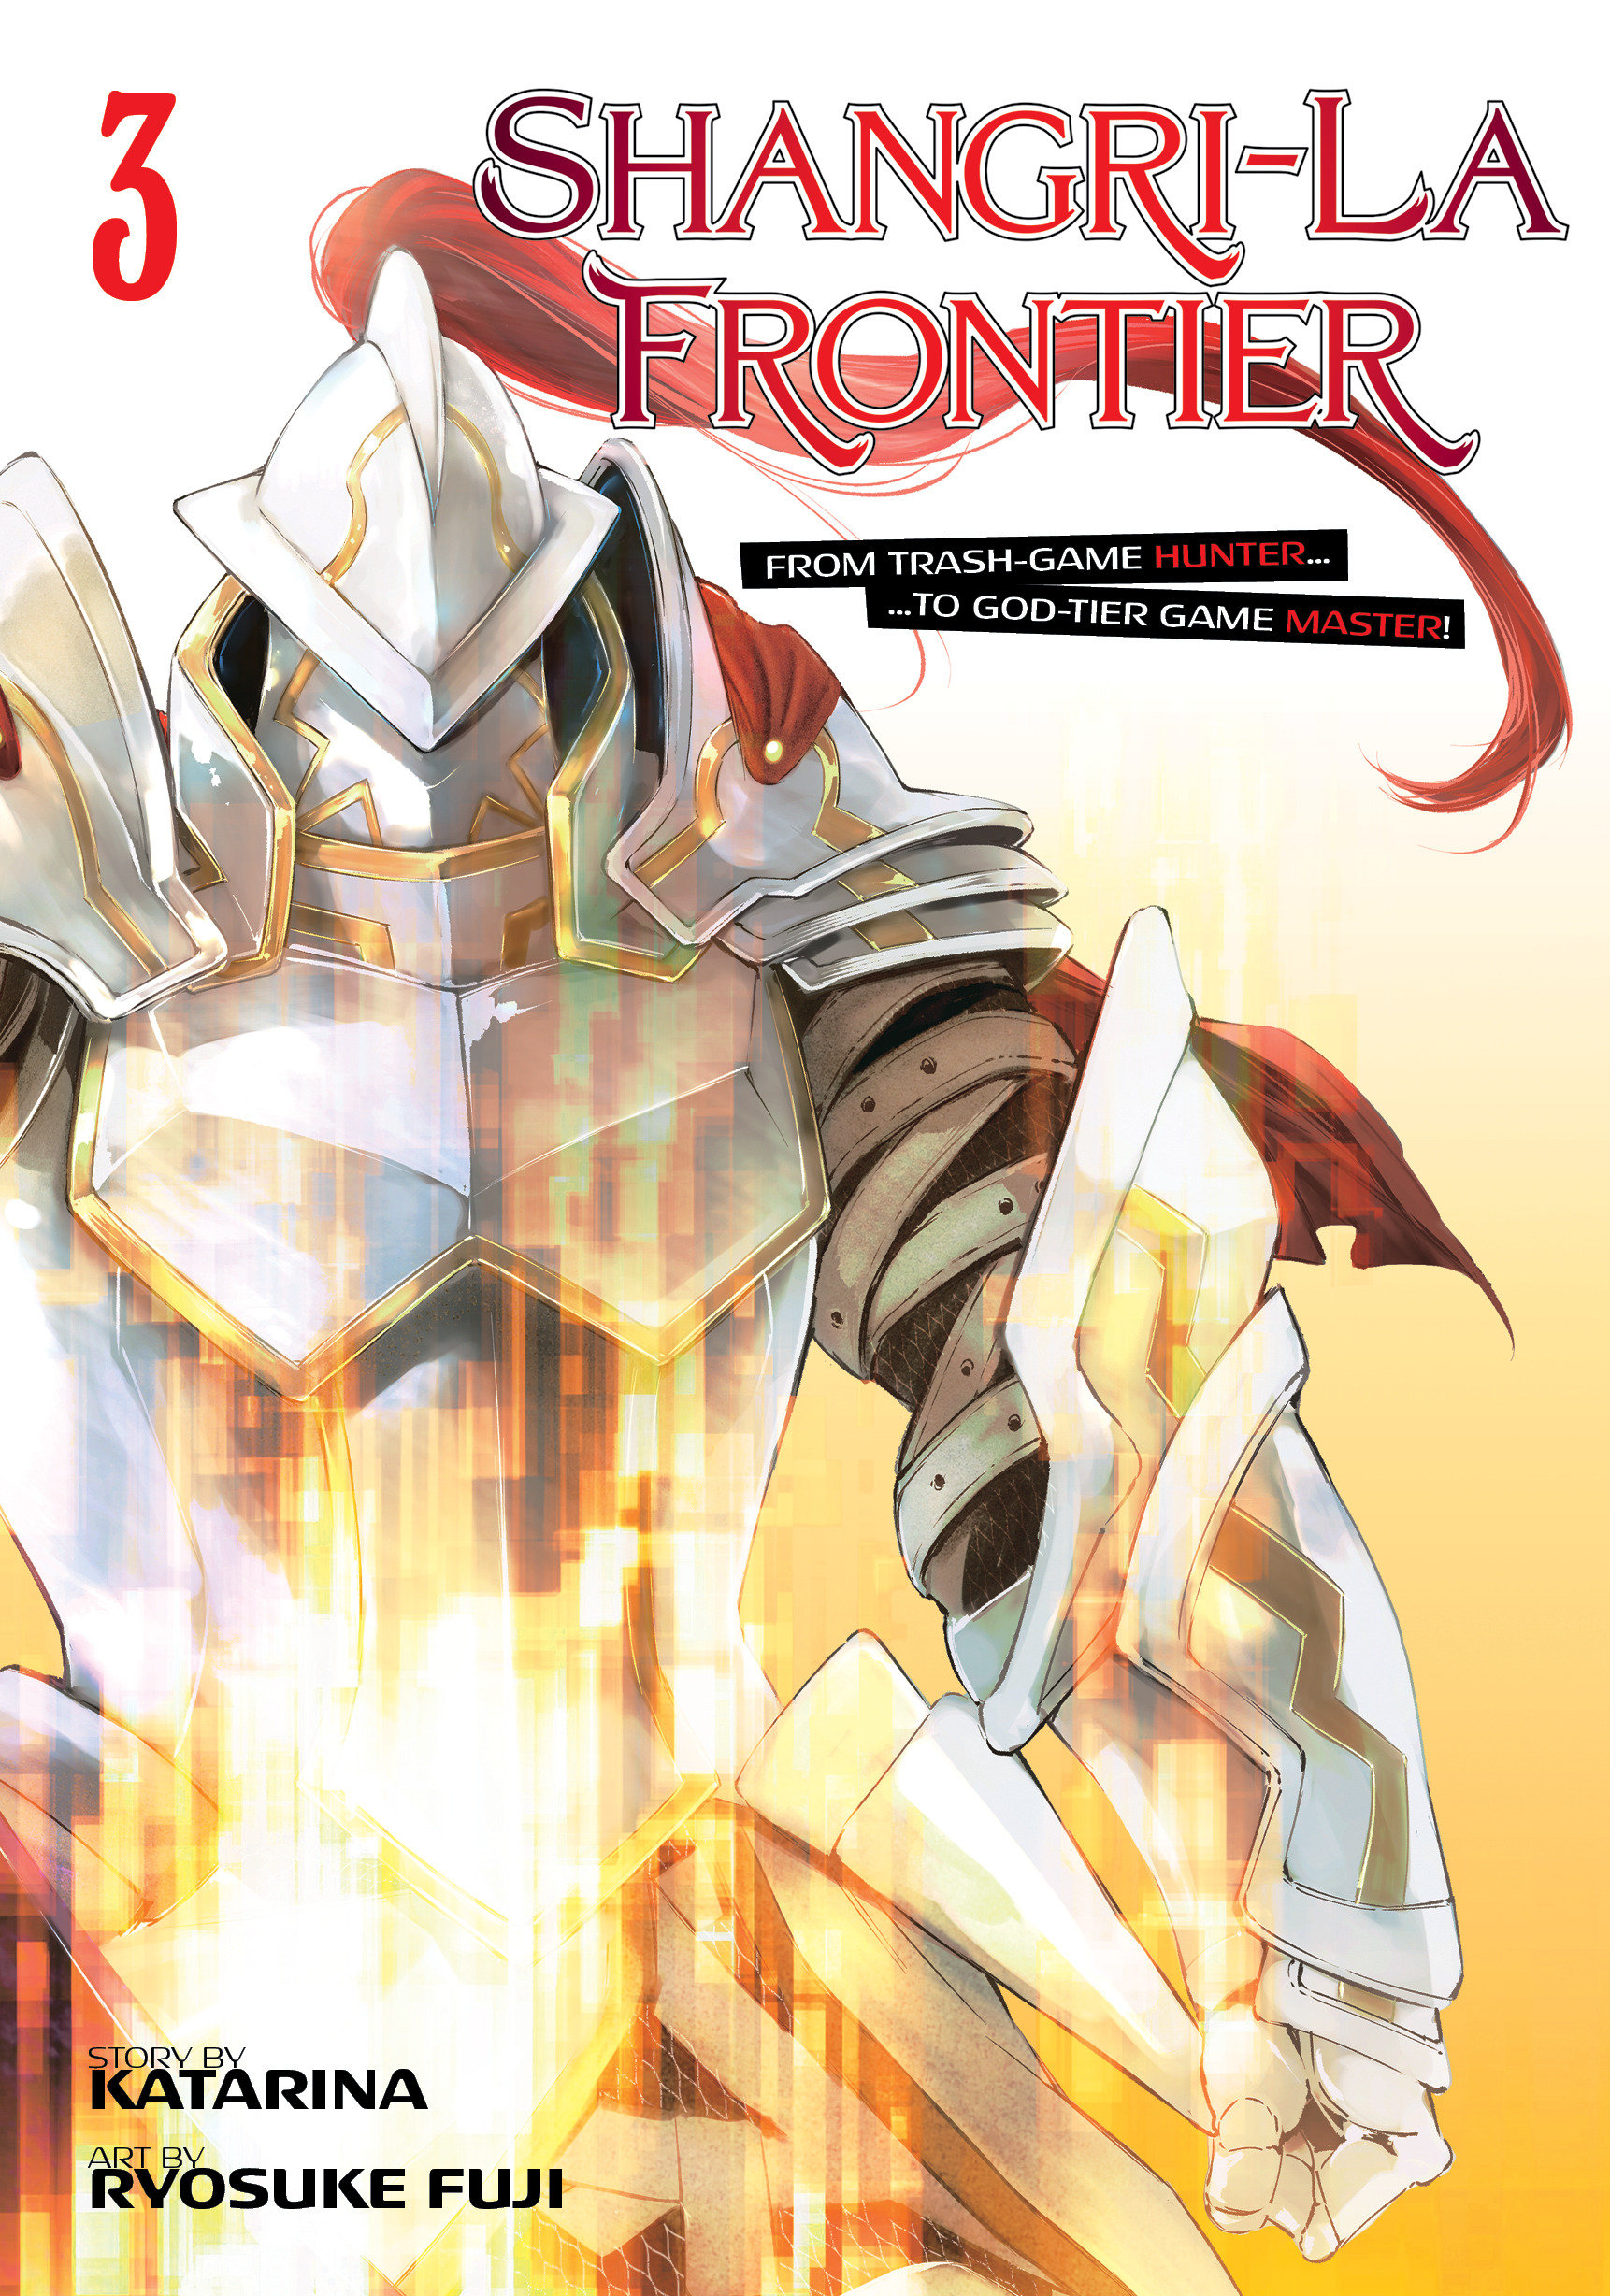 Shangri La Frontier Manga Volume 3